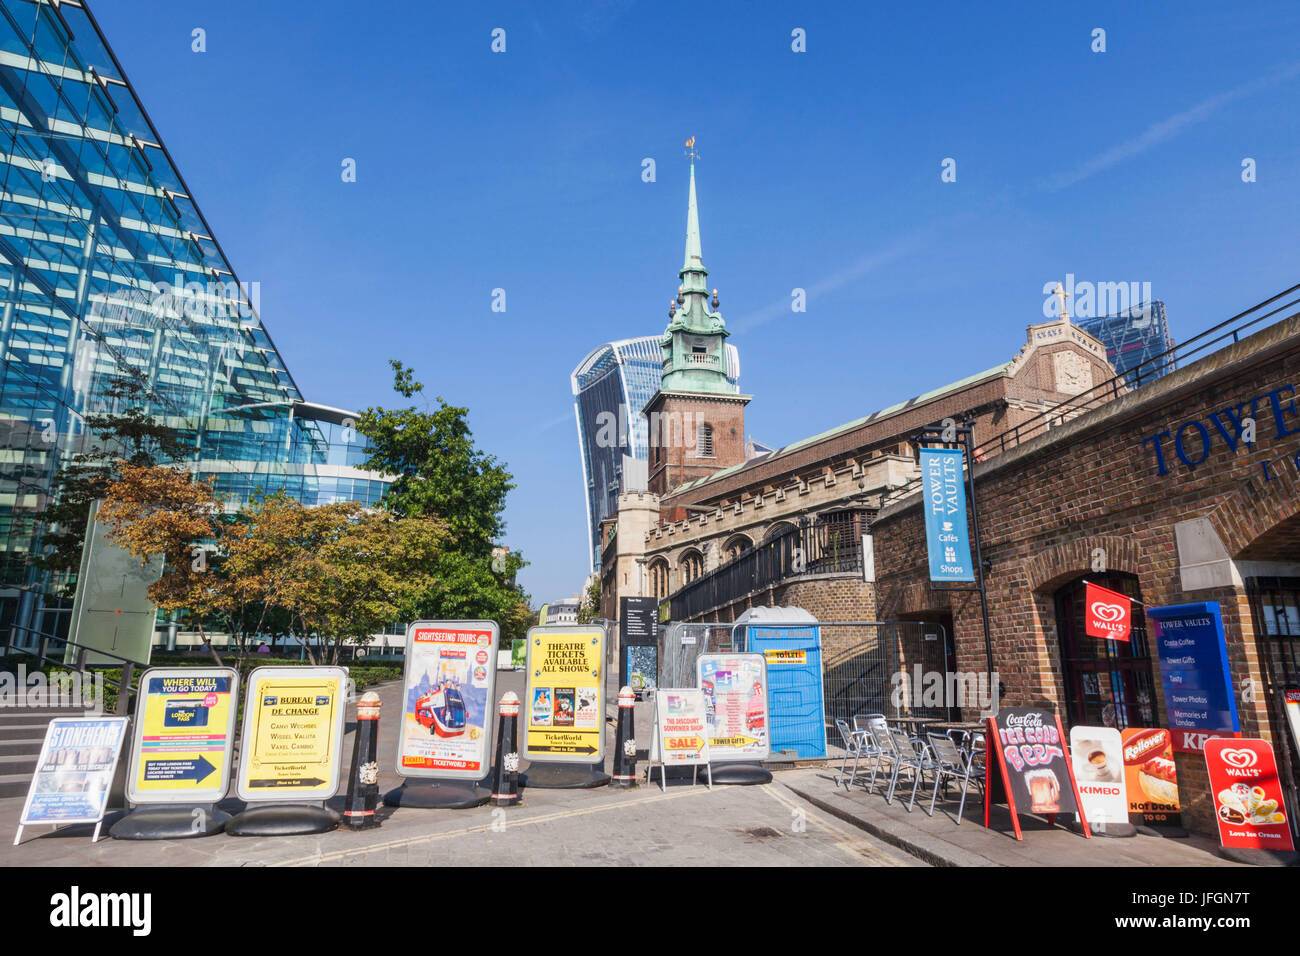 England, London, Advertising Billboards Blocking Footpath Stock Photo